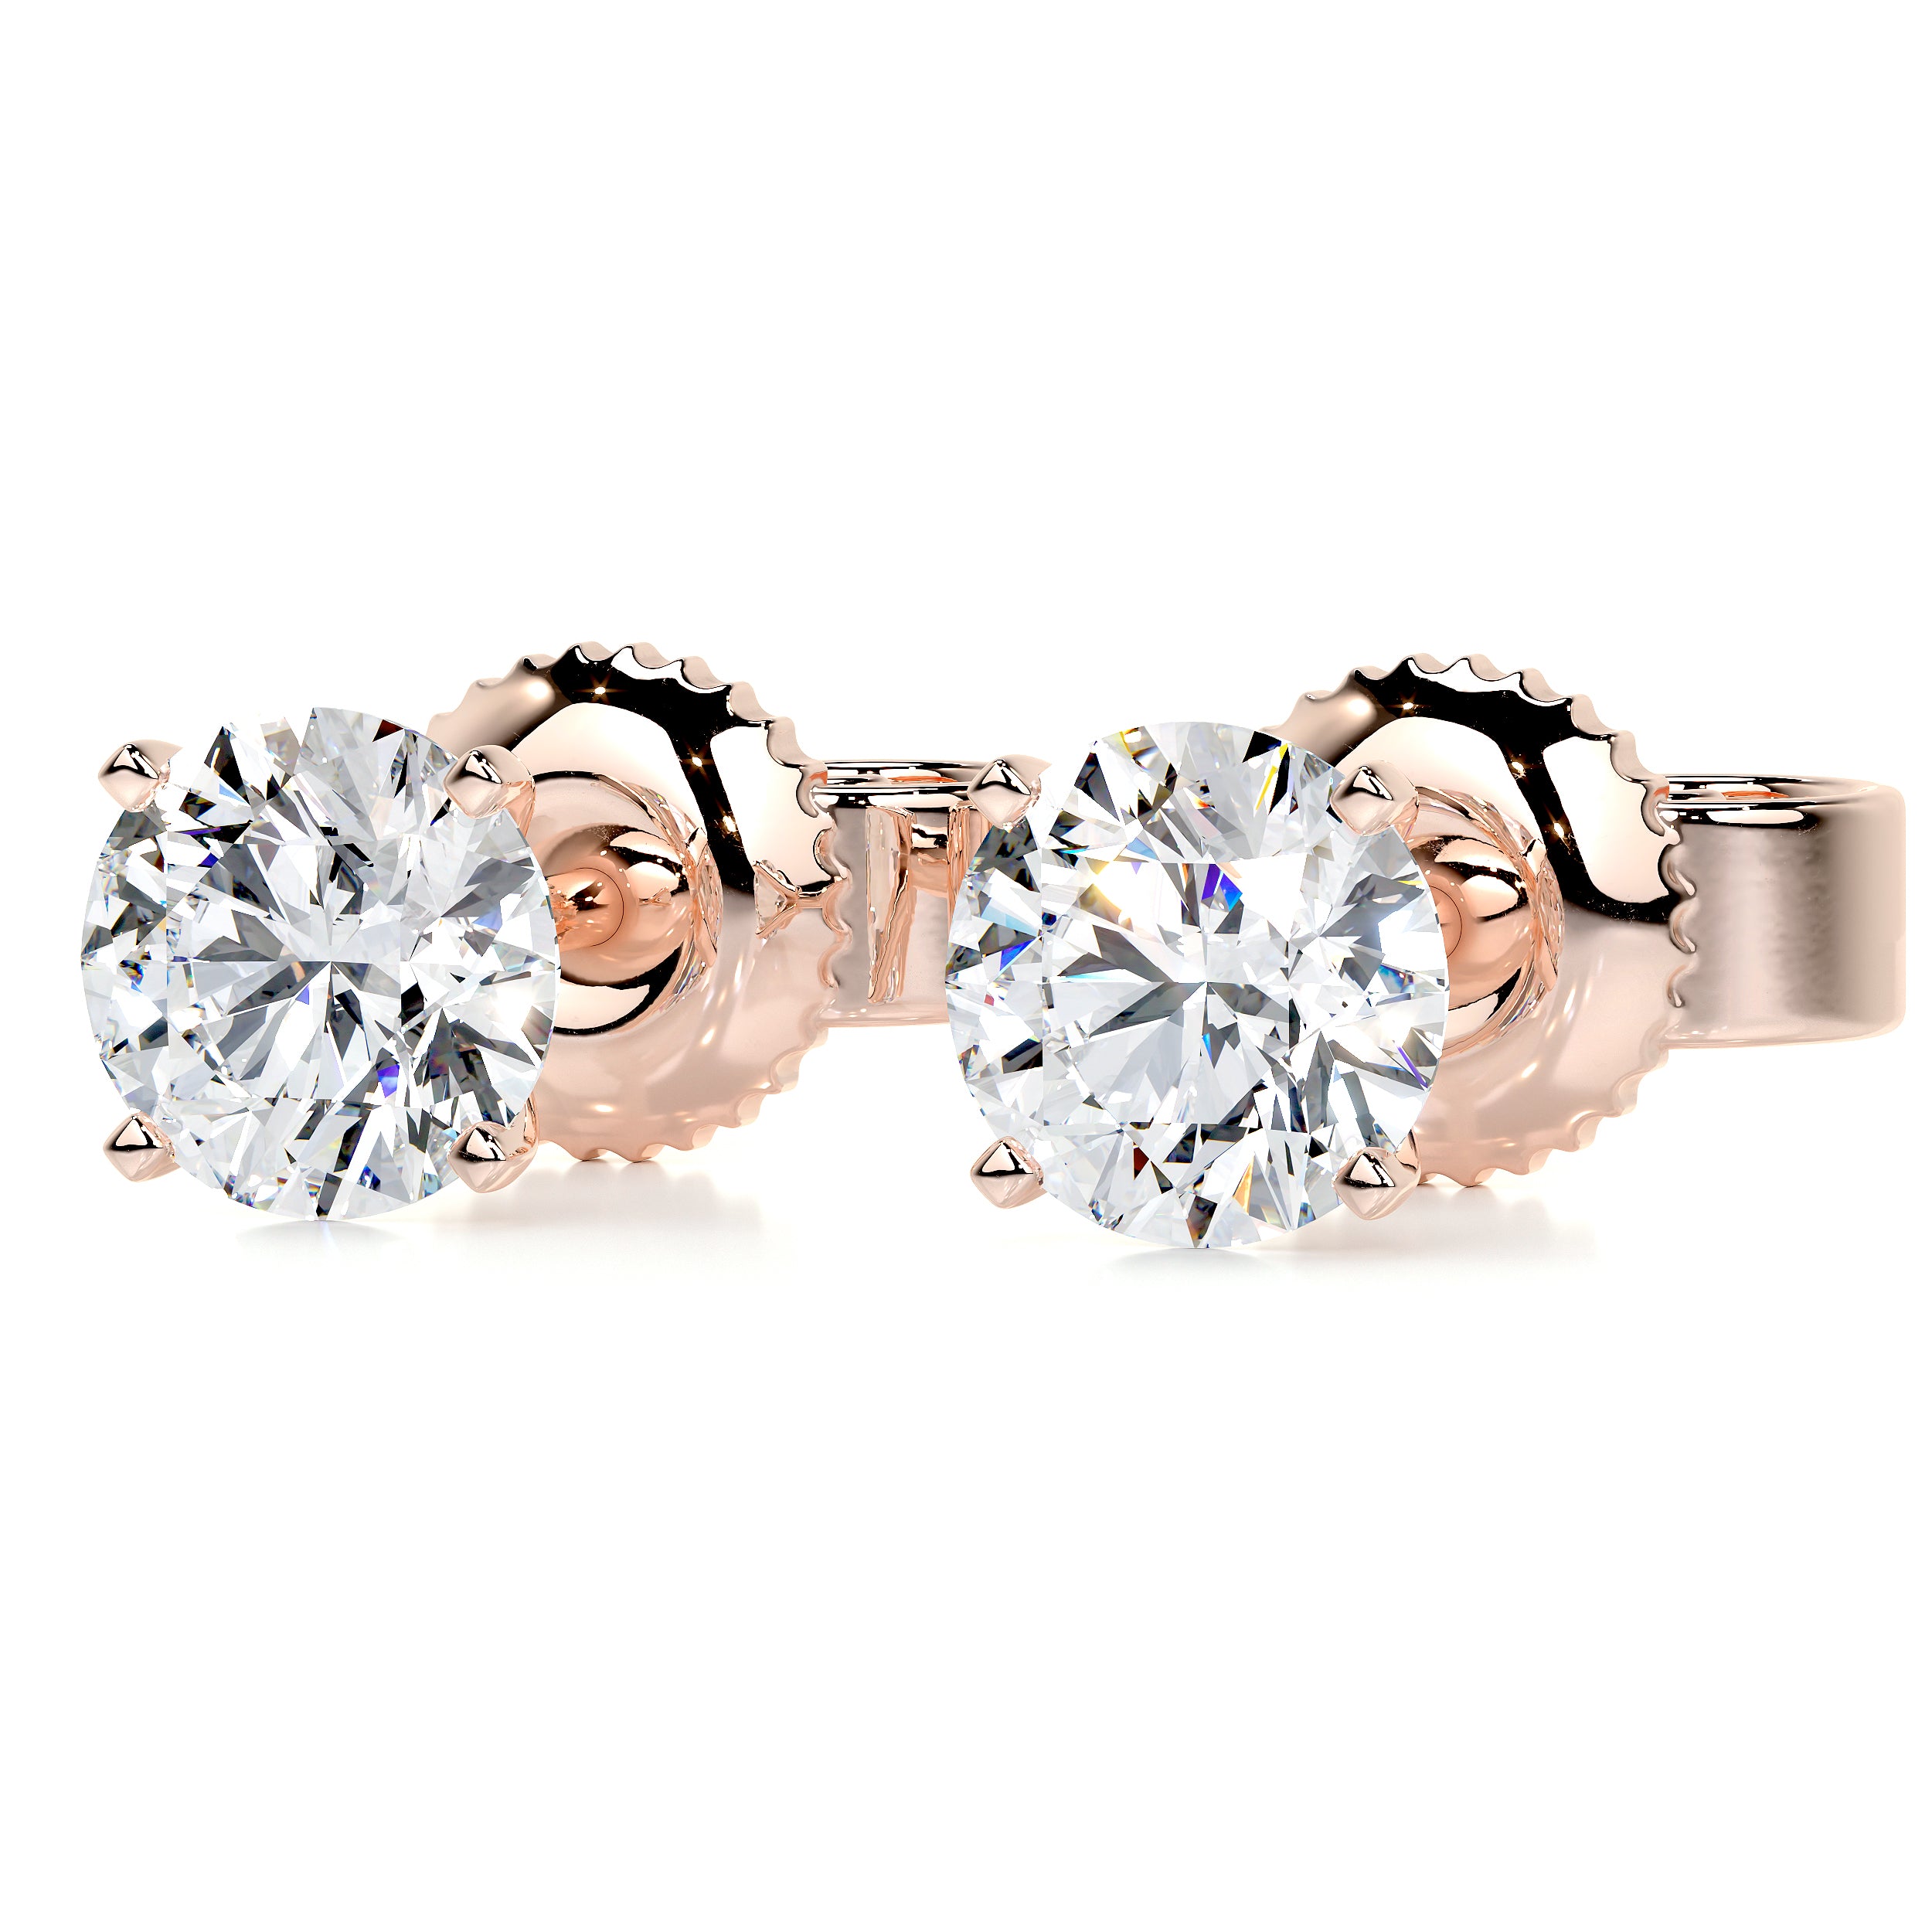 Allen Diamond Earrings   (3 Carat) -14K Rose Gold